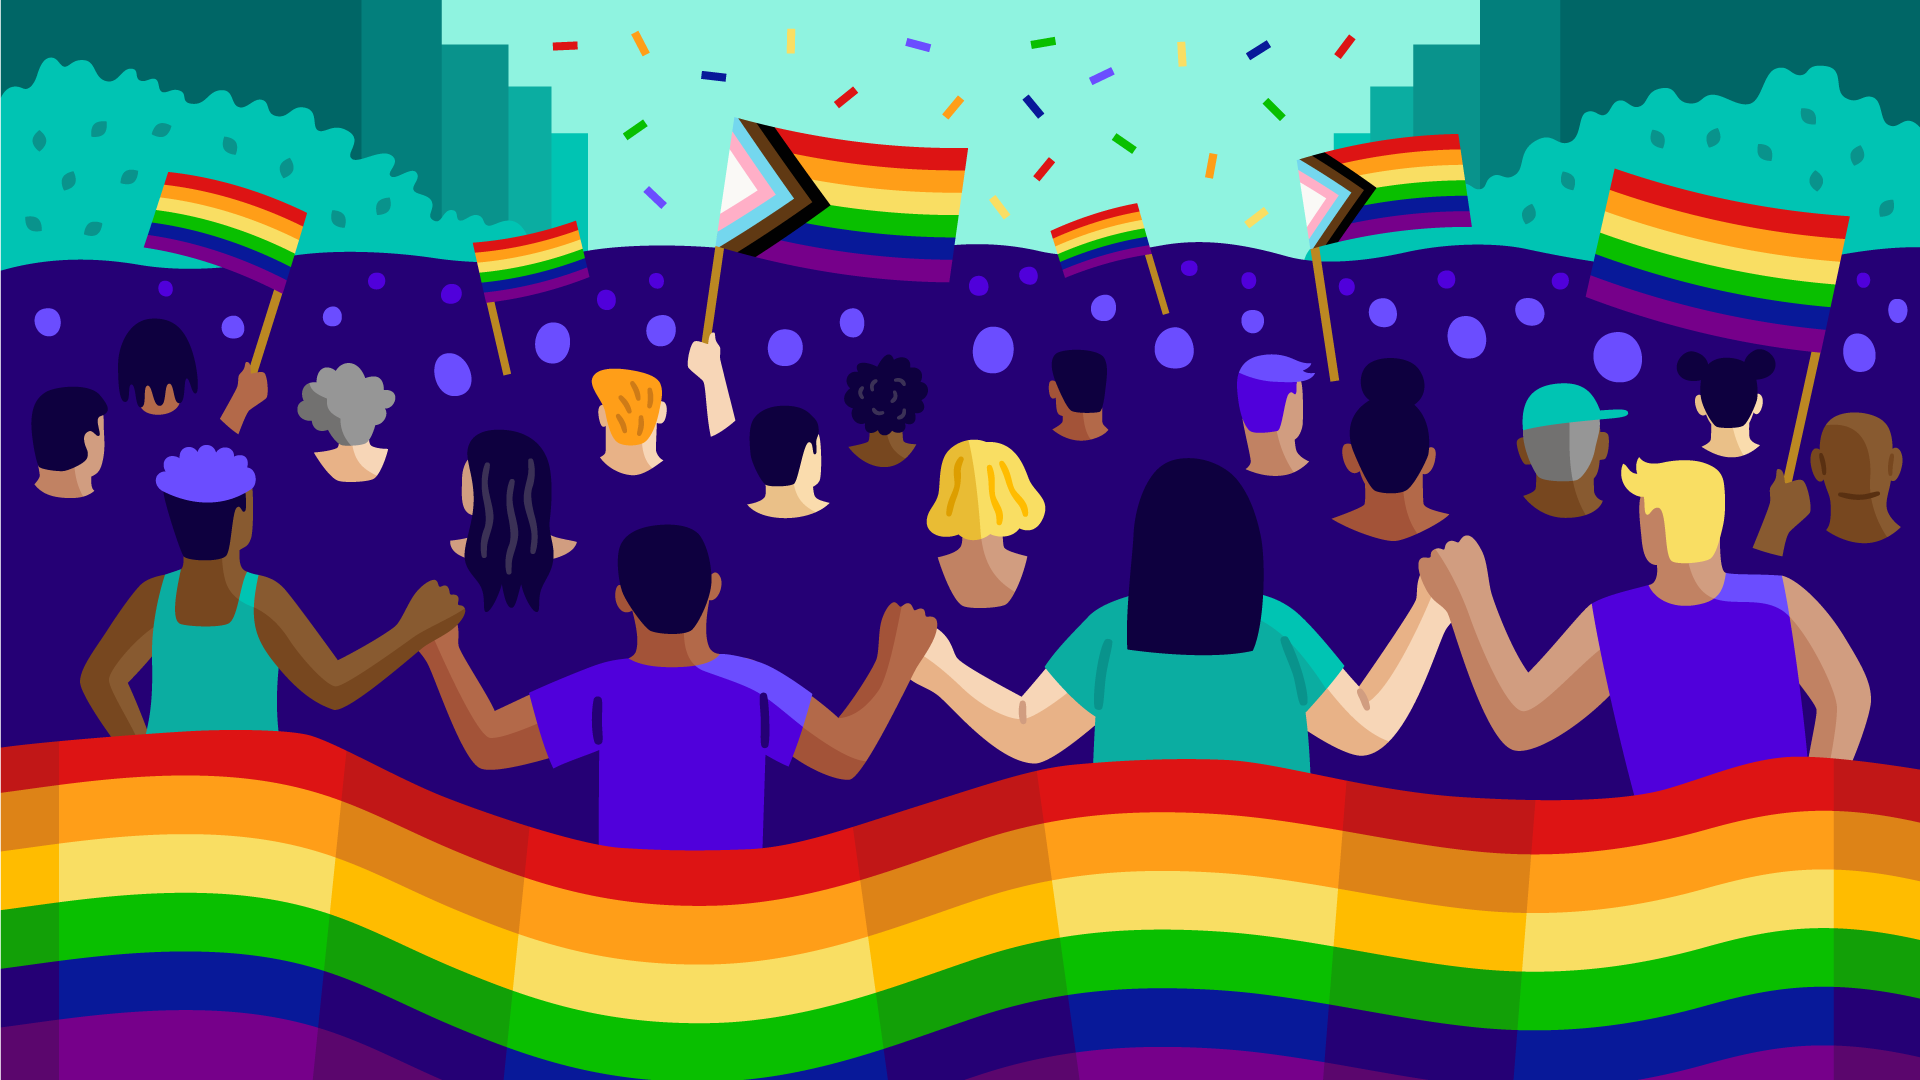 2020 Election: LGBTQ+ Rights